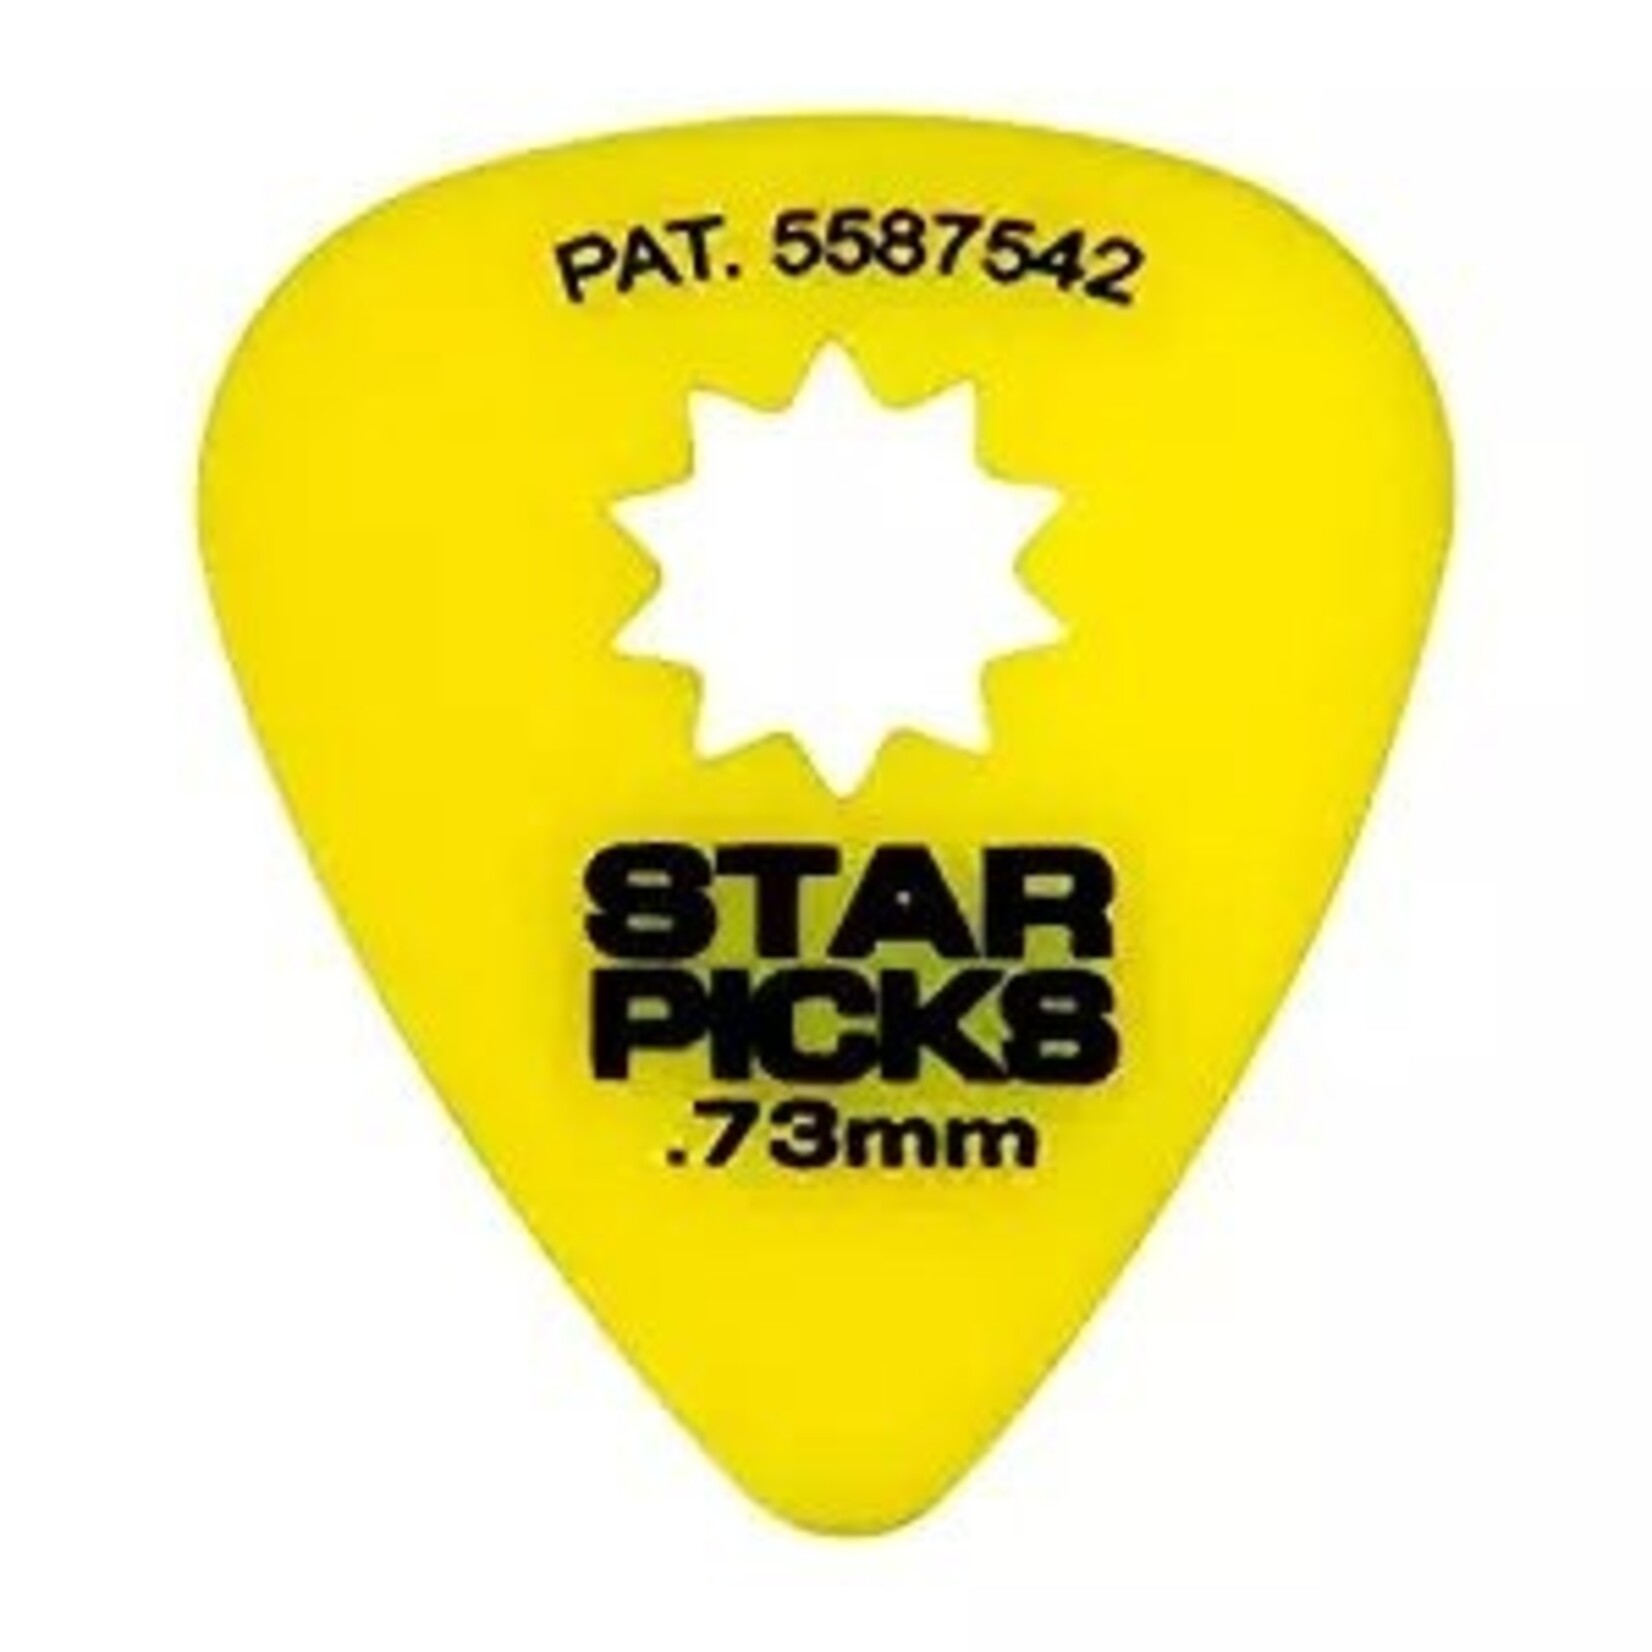 Star Picks 0.73mm Guitar Picks 12 Pack - Yellow